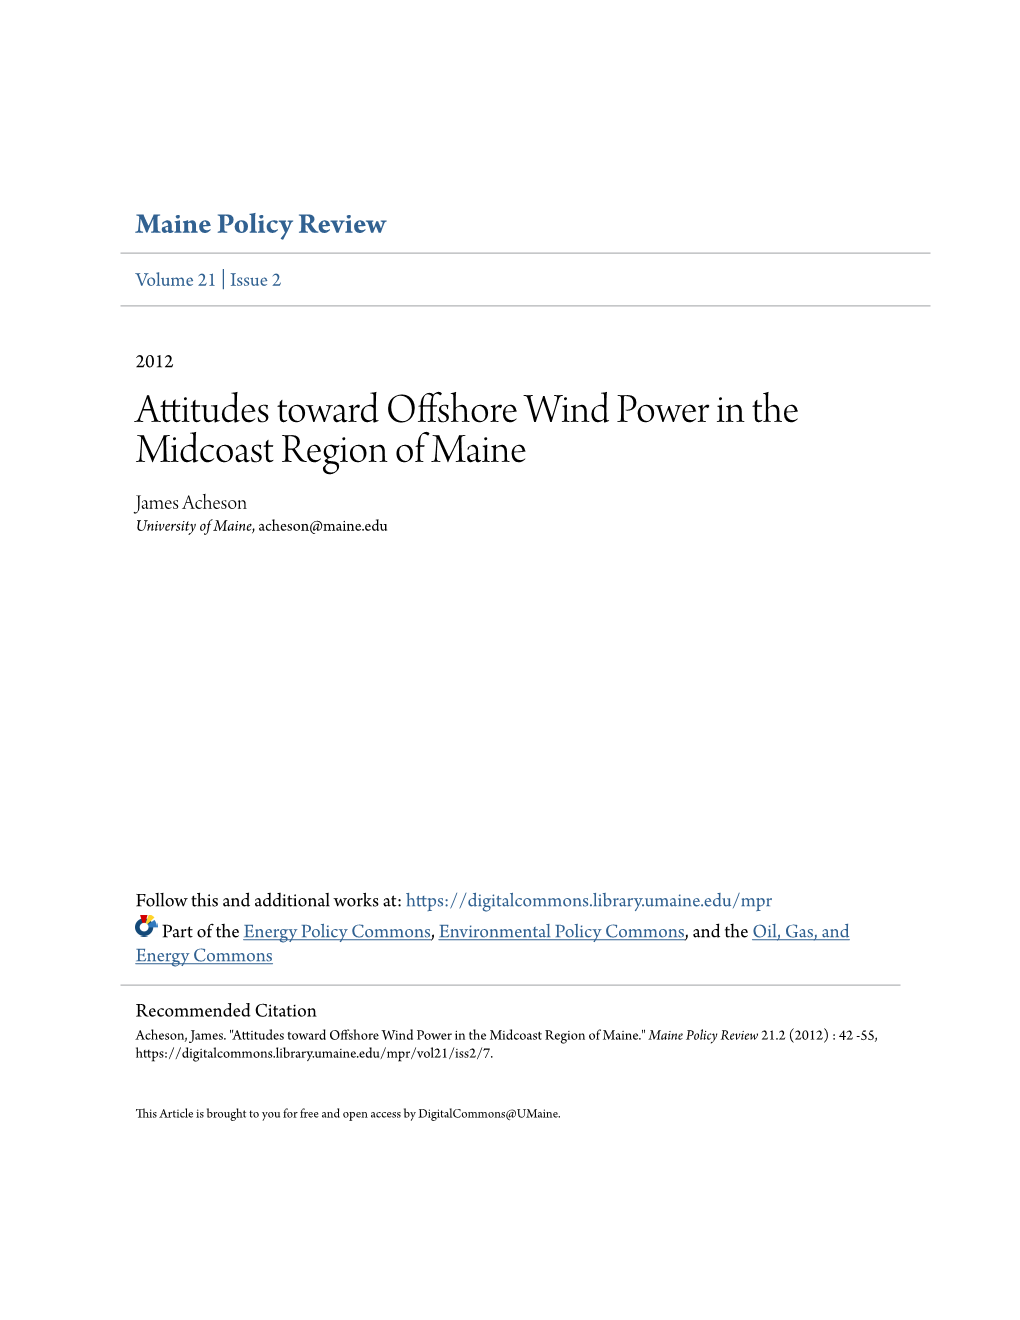 Attitudes Toward Offshore Wind Power in the Midcoast Region of Maine James Acheson University of Maine, Acheson@Maine.Edu